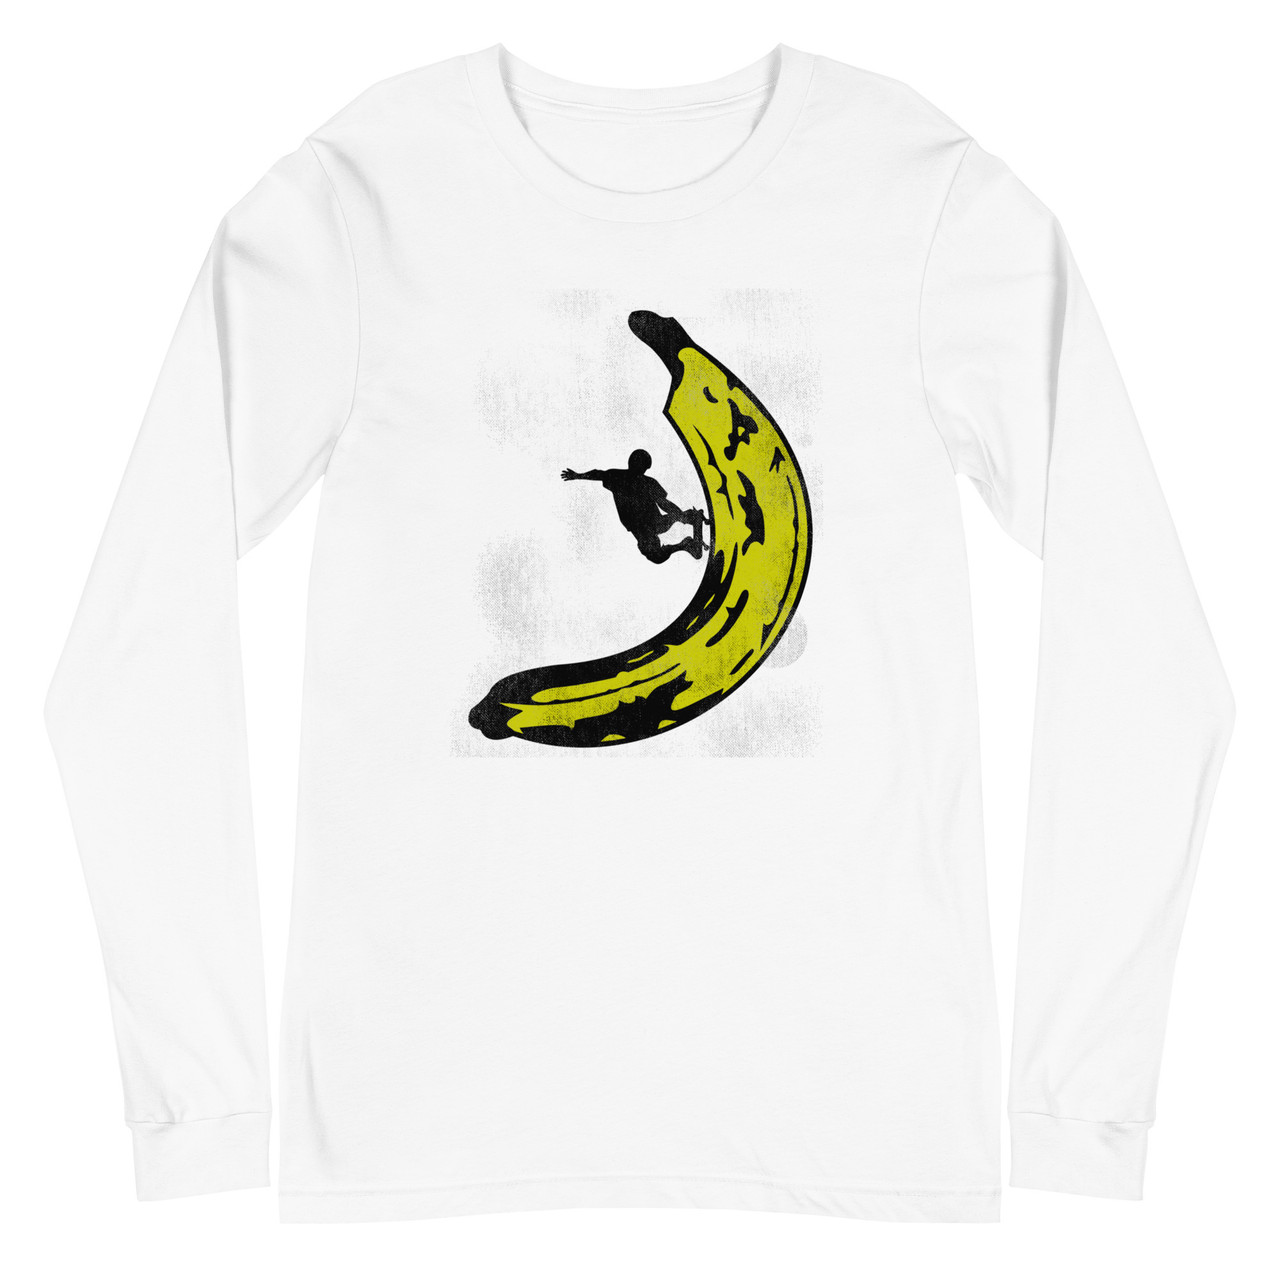 Banana Skateboard Unisex Long Sleeve Tee - Bella + Canvas 3501 